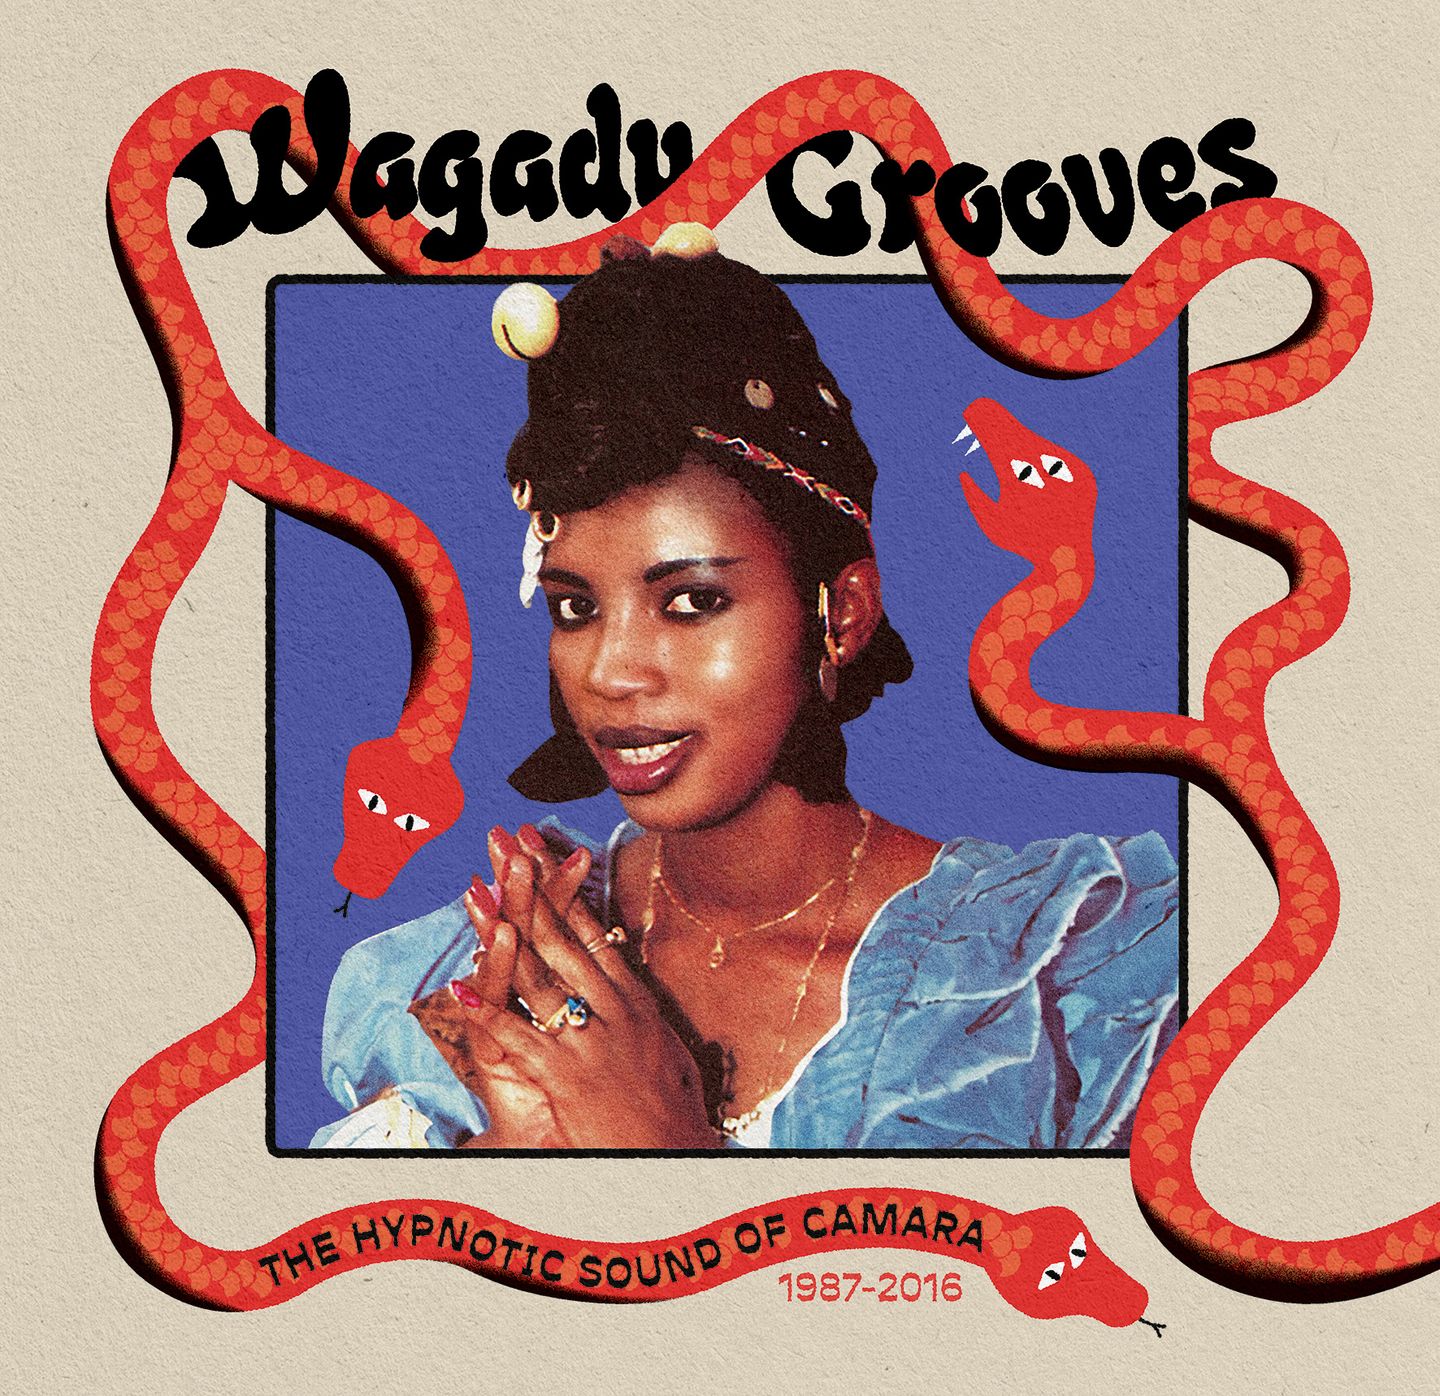 Various Artists - Wagadu Grooves: The Hypnotic Sound Of Camara 1987-2016 : 2LP